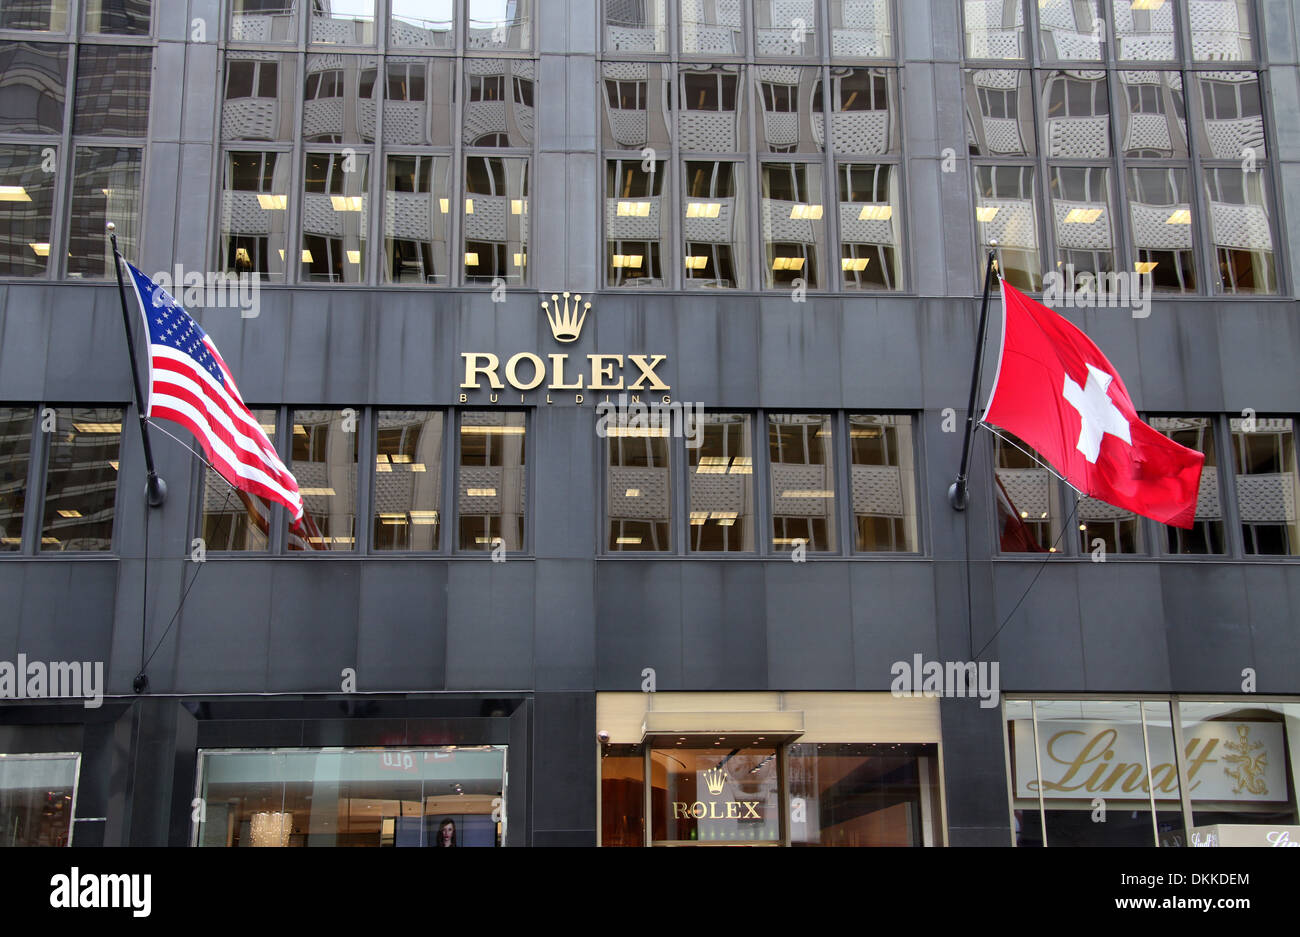 Rolex manhattan new york stock photography and - Alamy